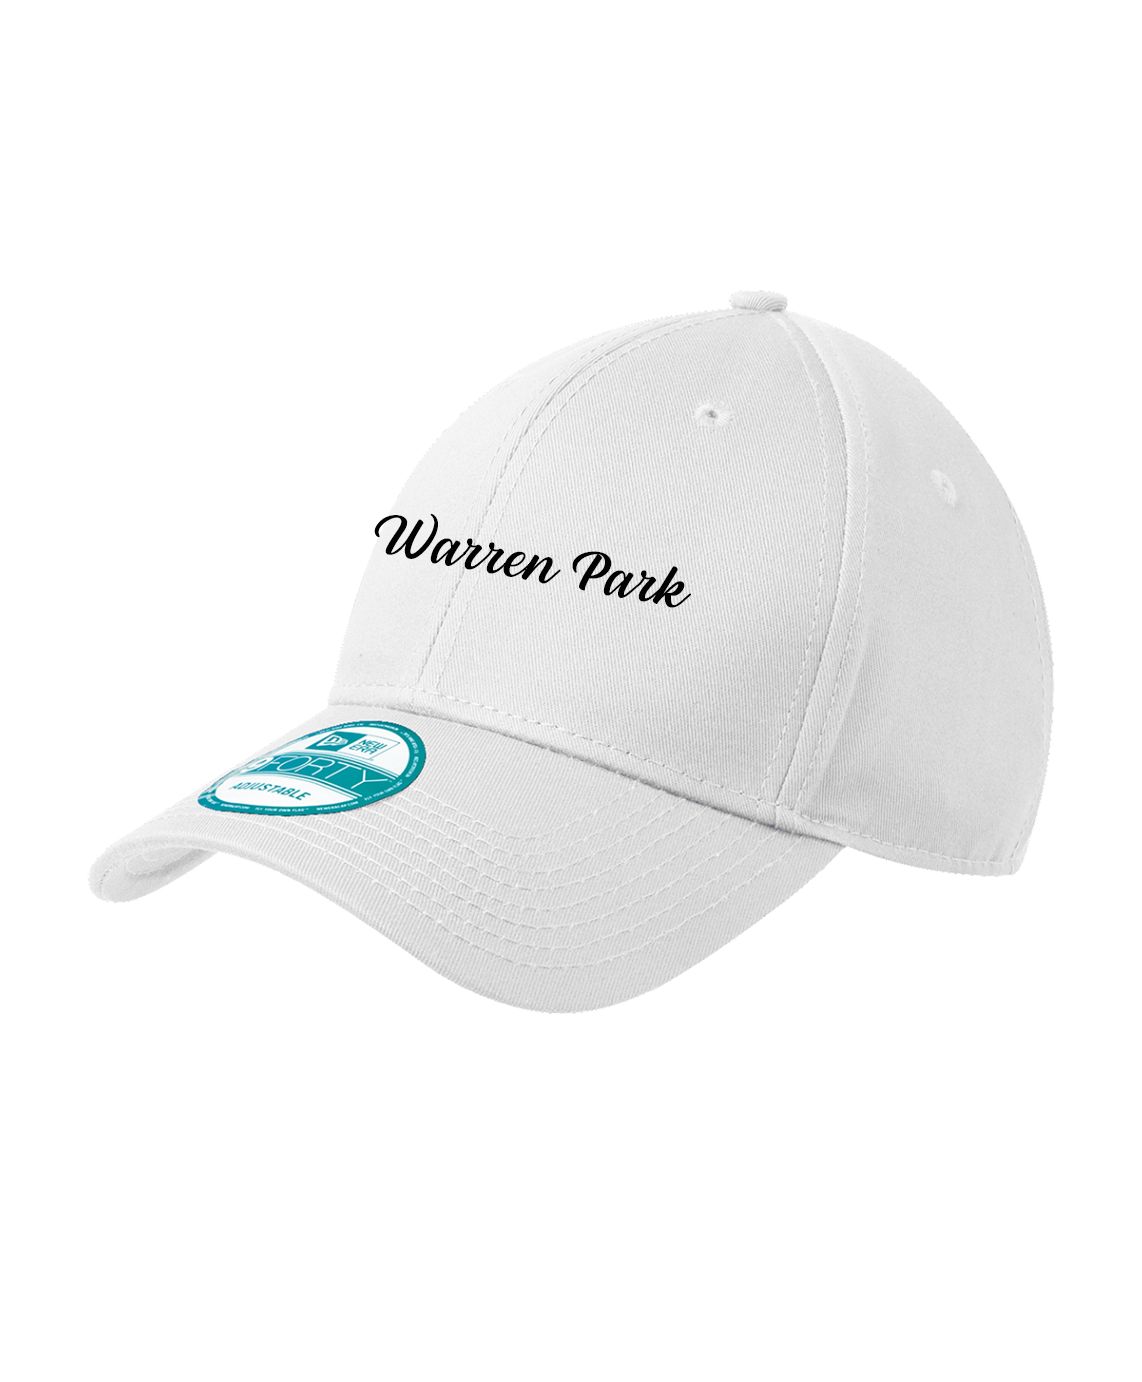 Warren Park - New Era® - Adjustable Structured Cap